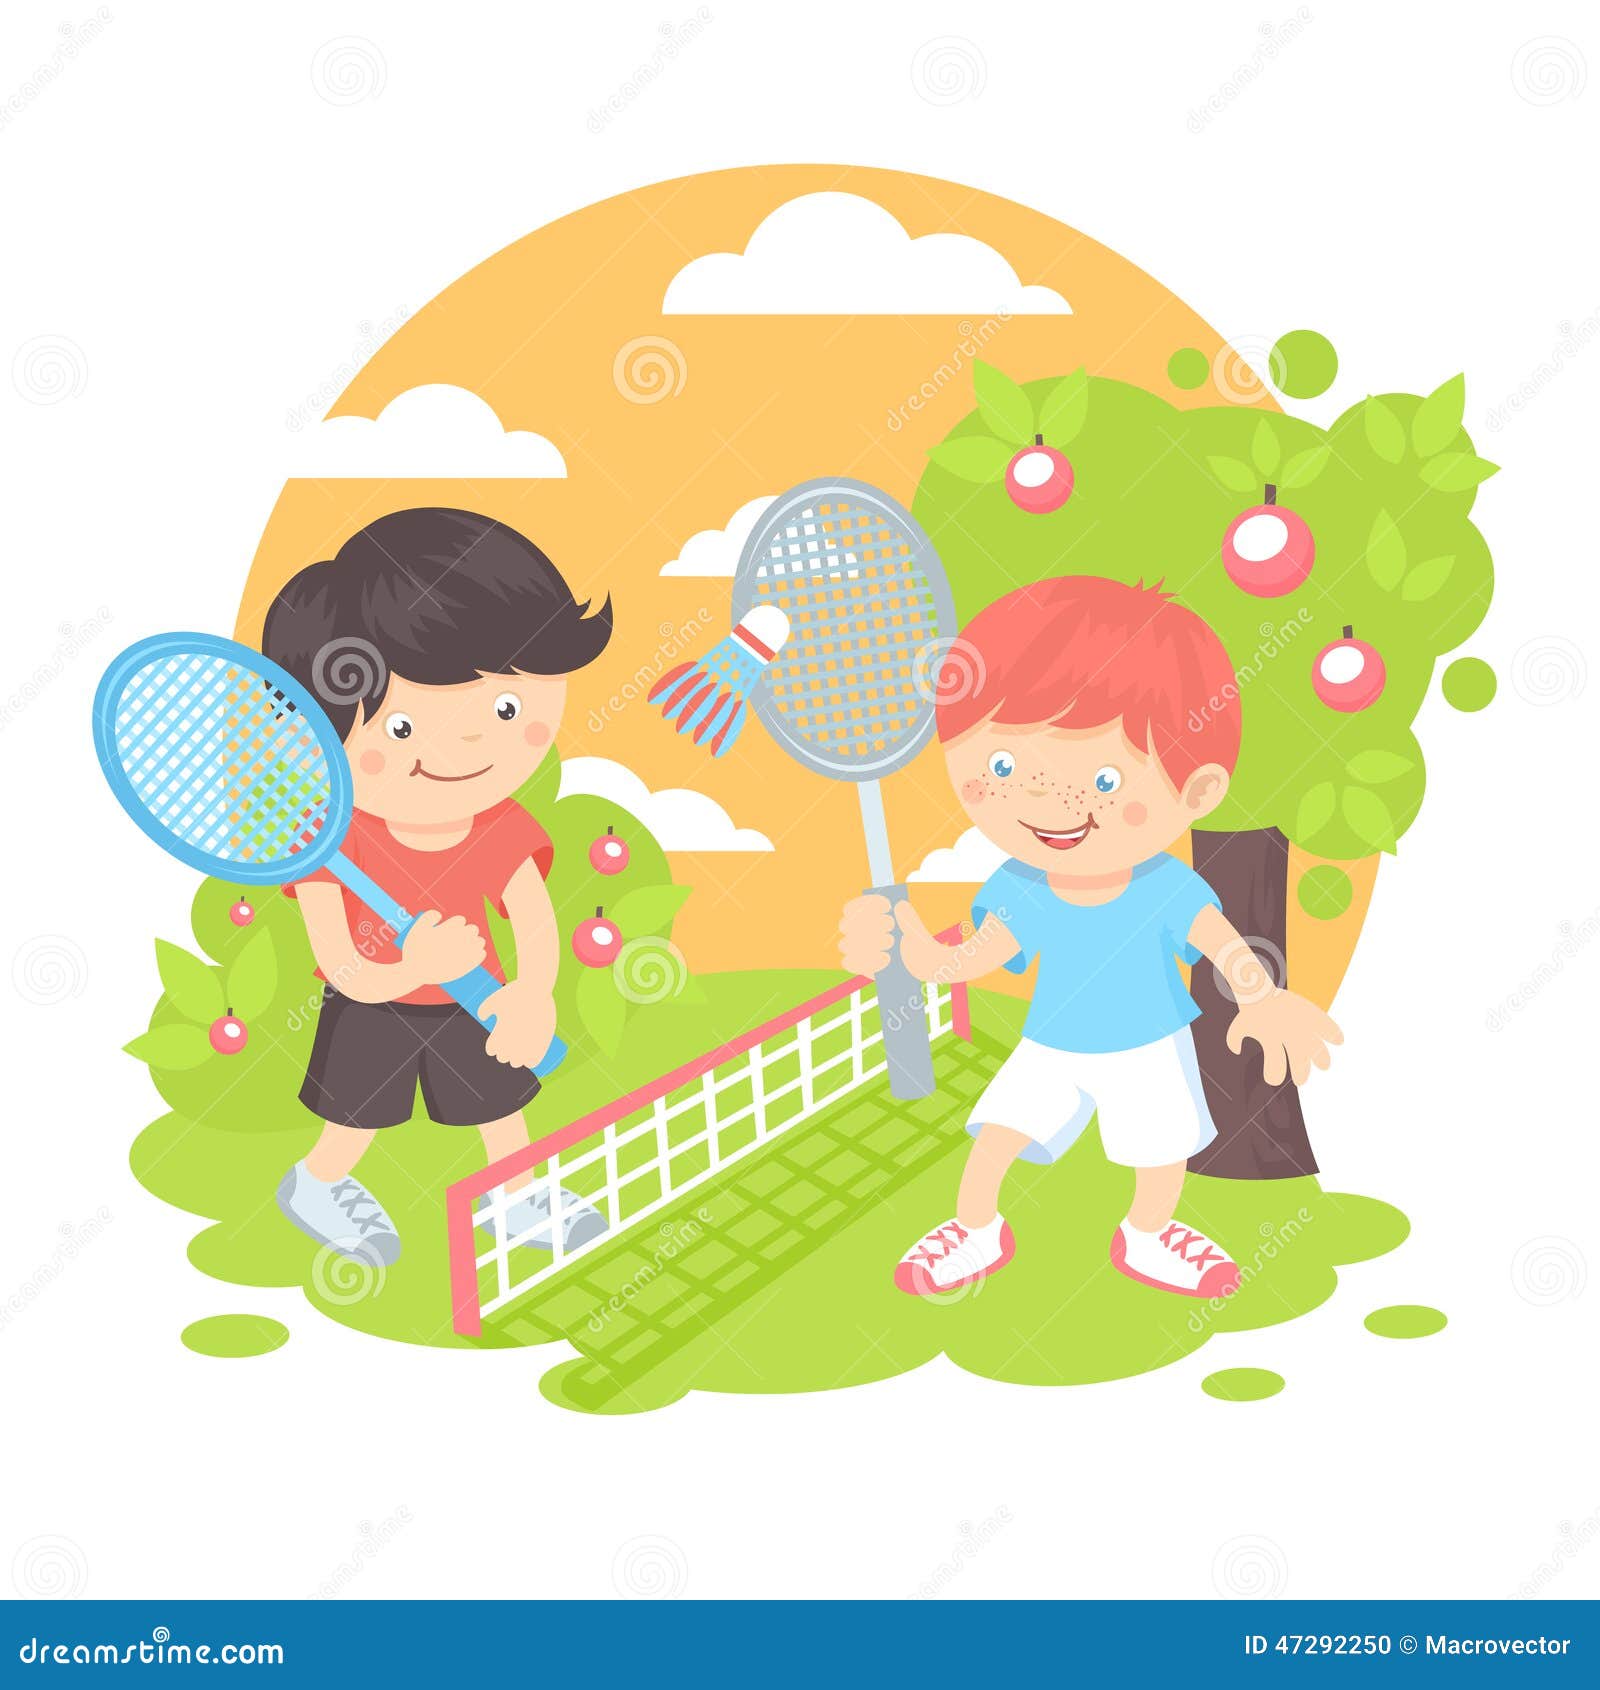 play badminton clipart - photo #29